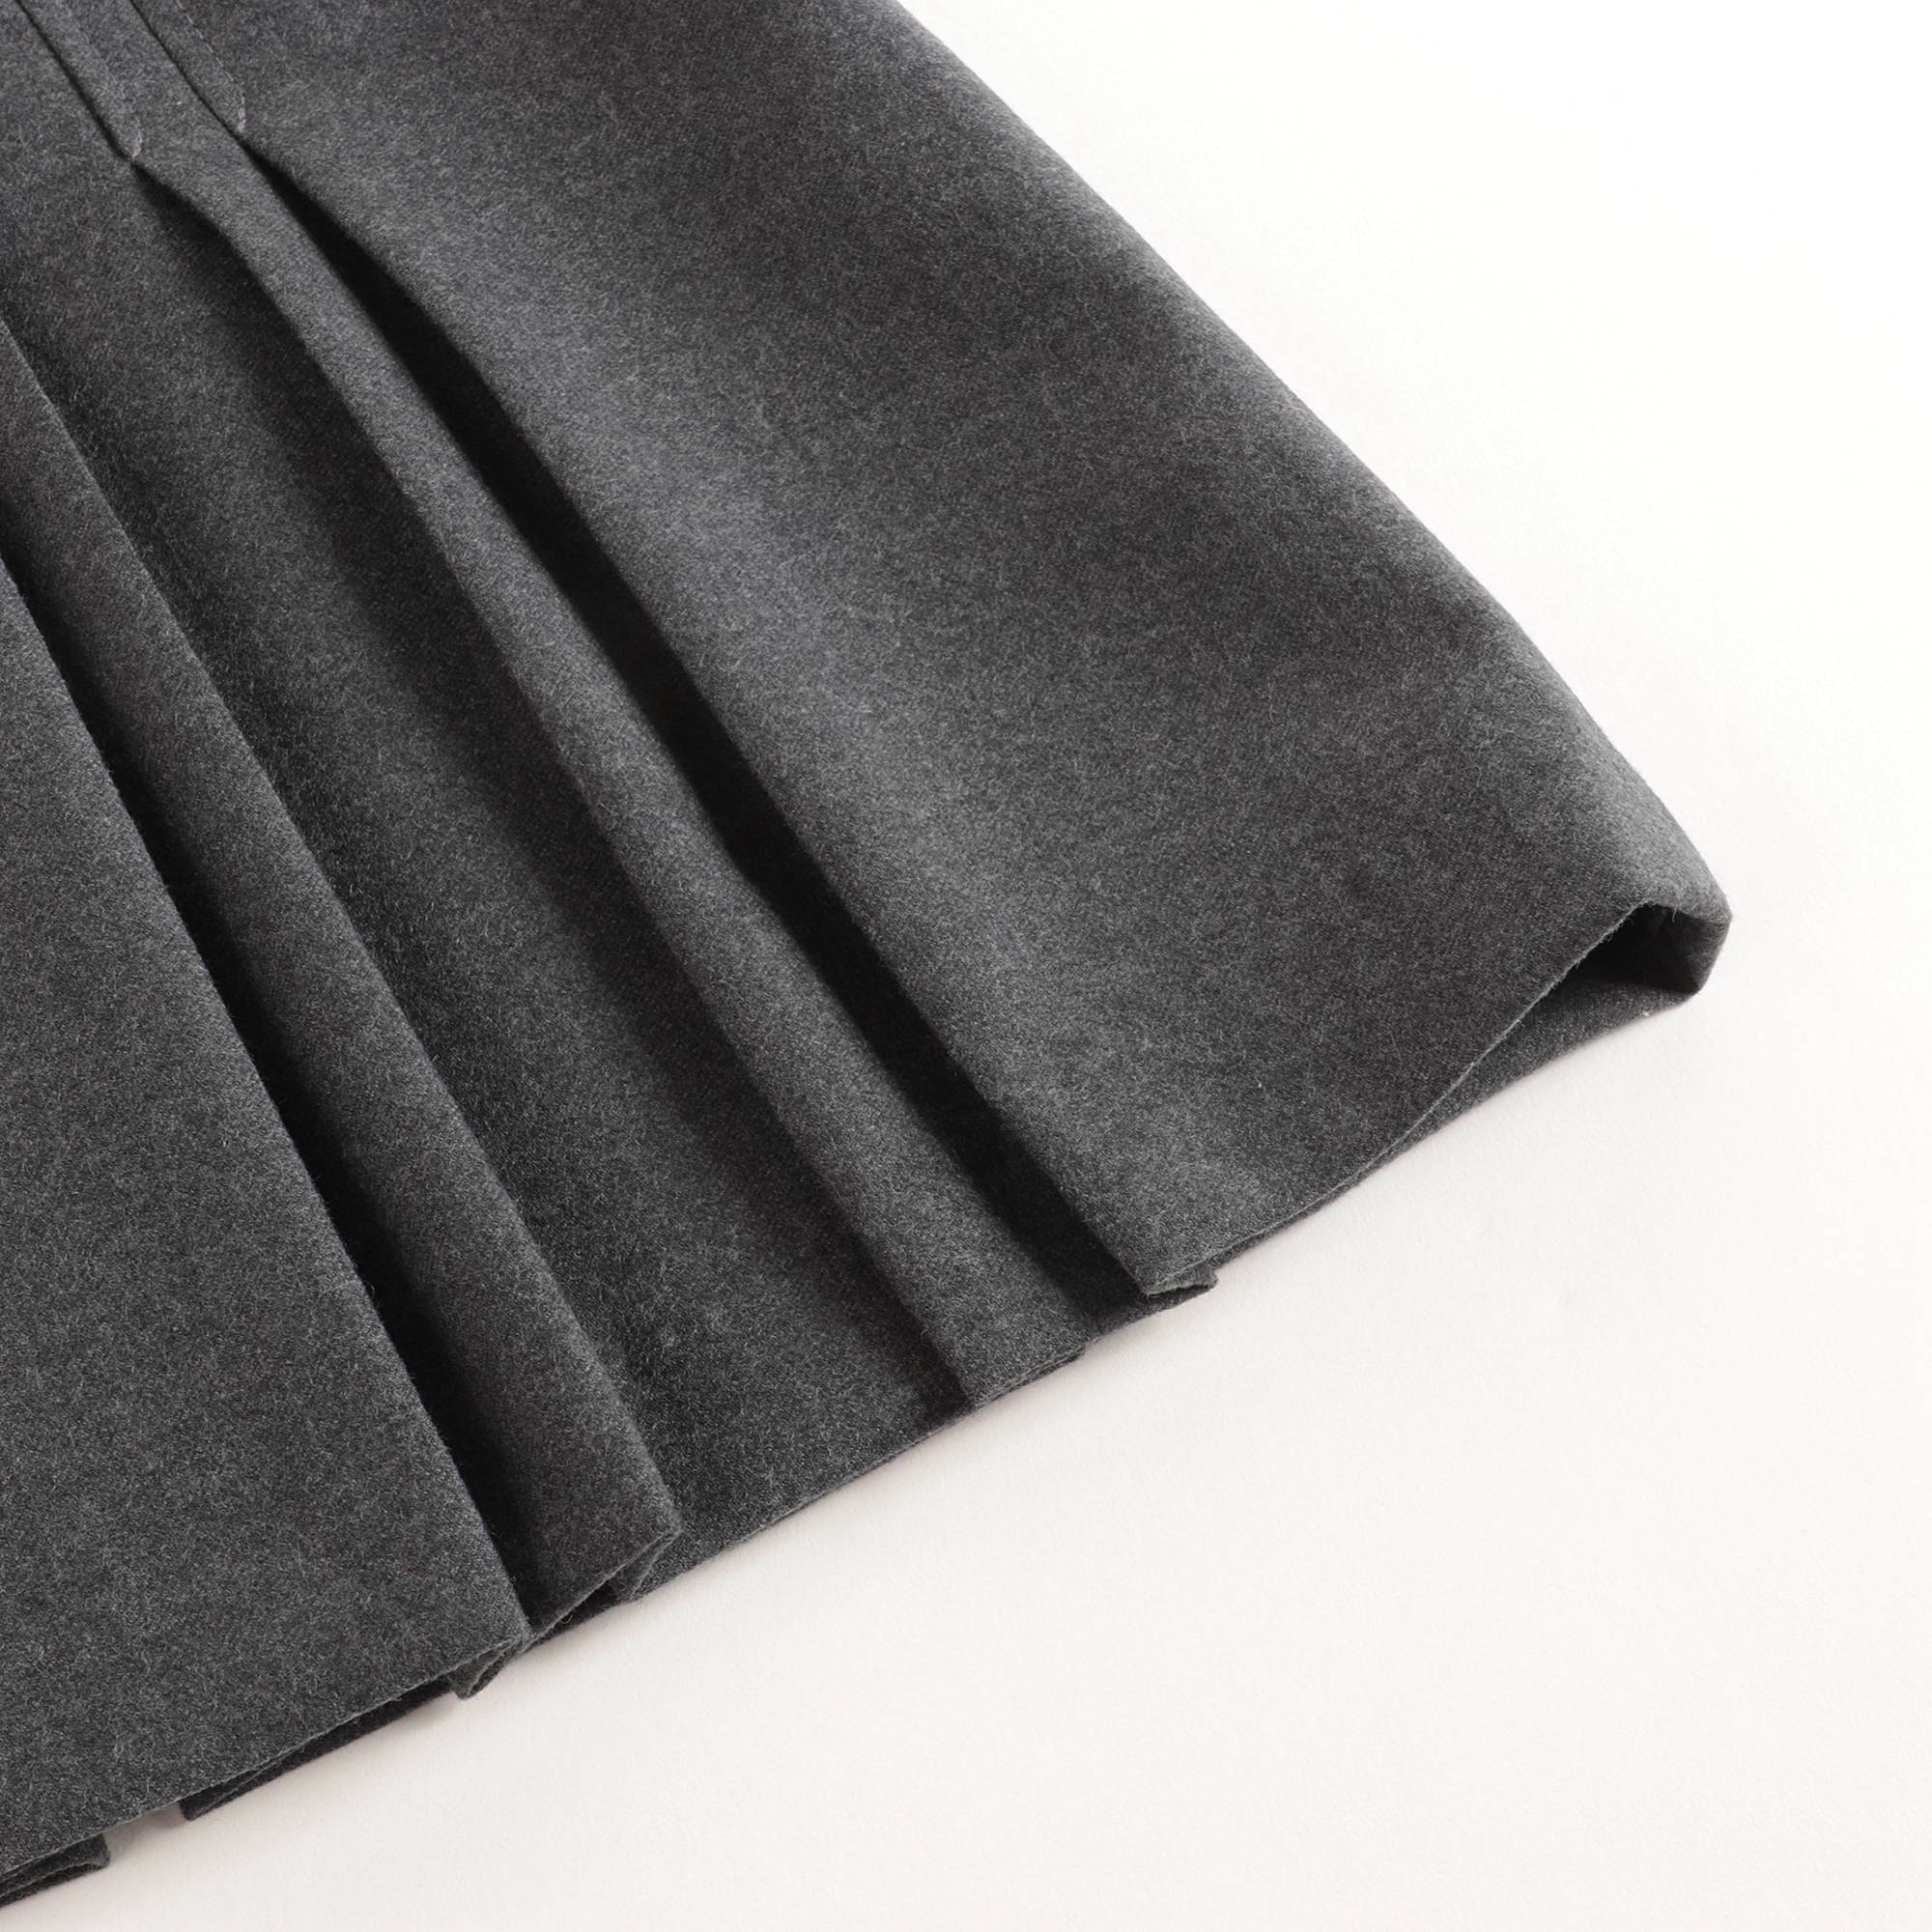 Girls Grey Pleated Wool Skirt